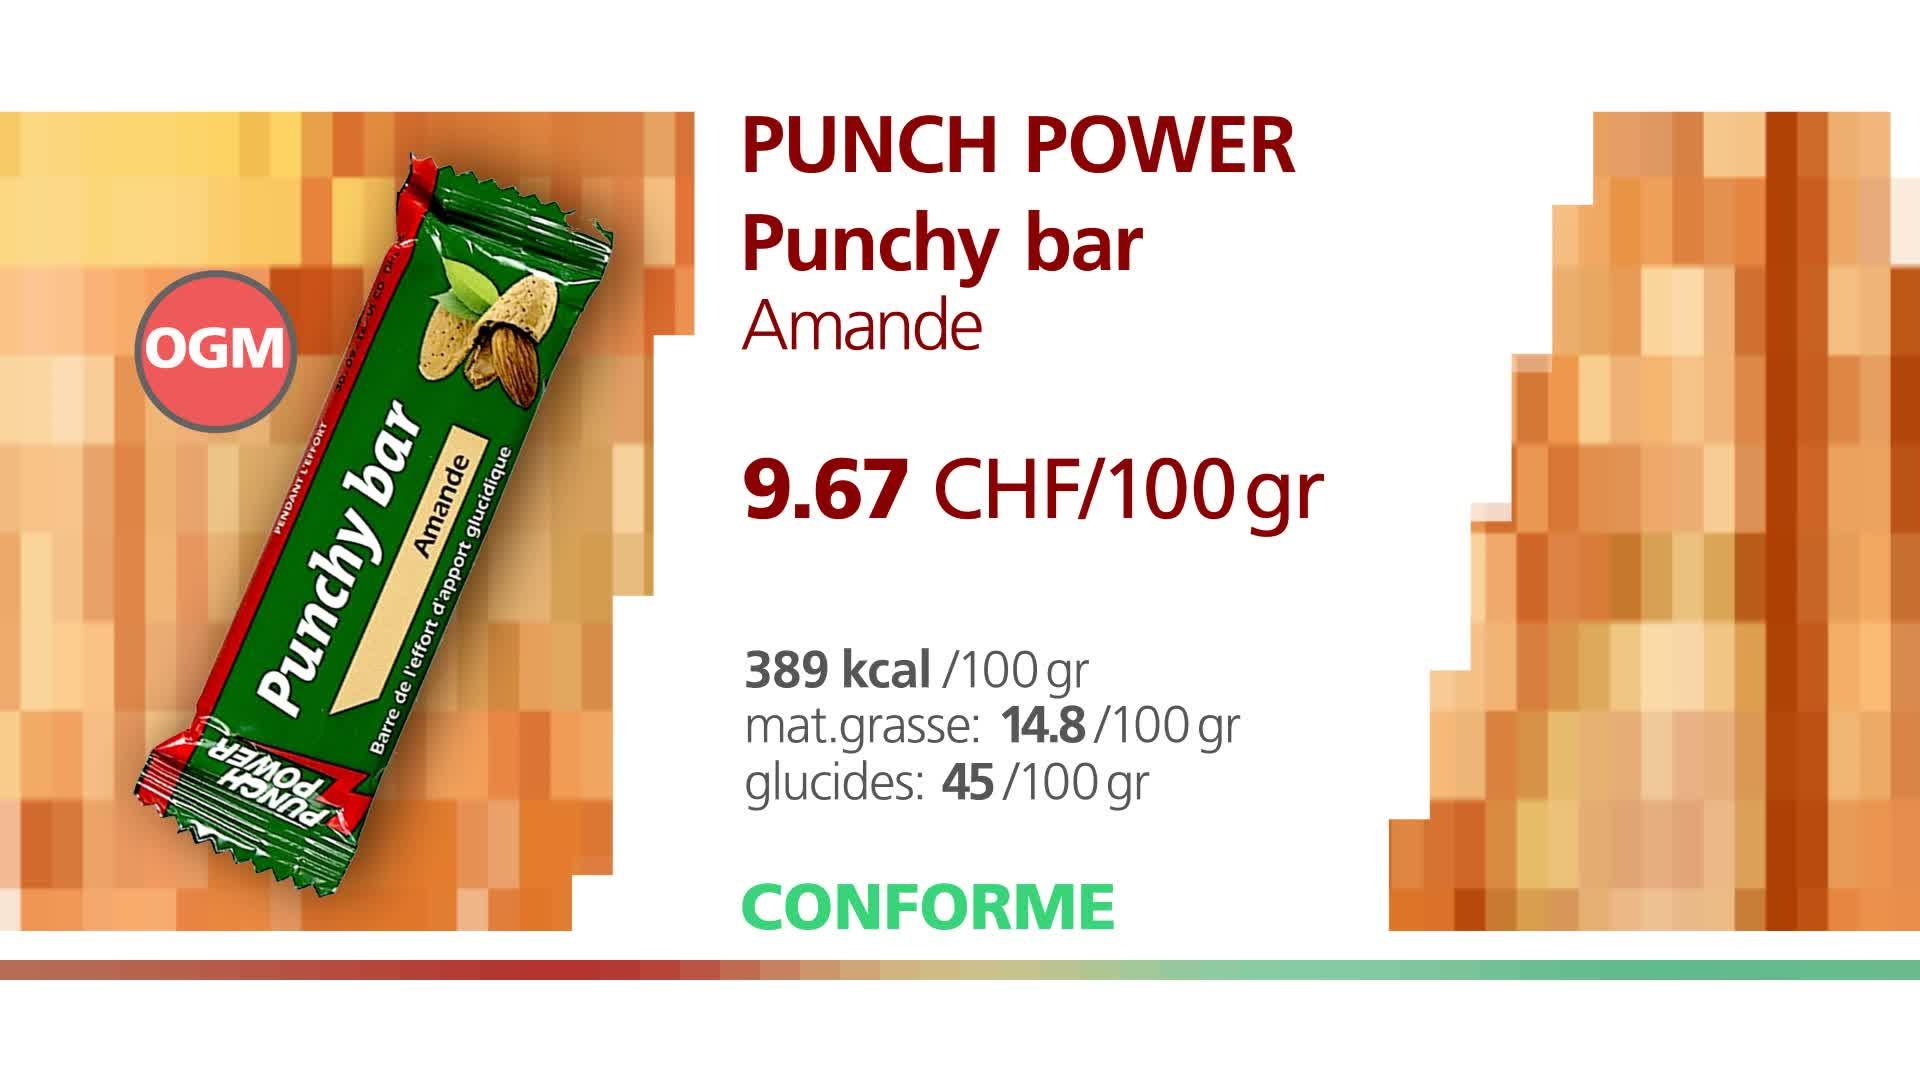 La Punch Power "Punchy bar Amande".